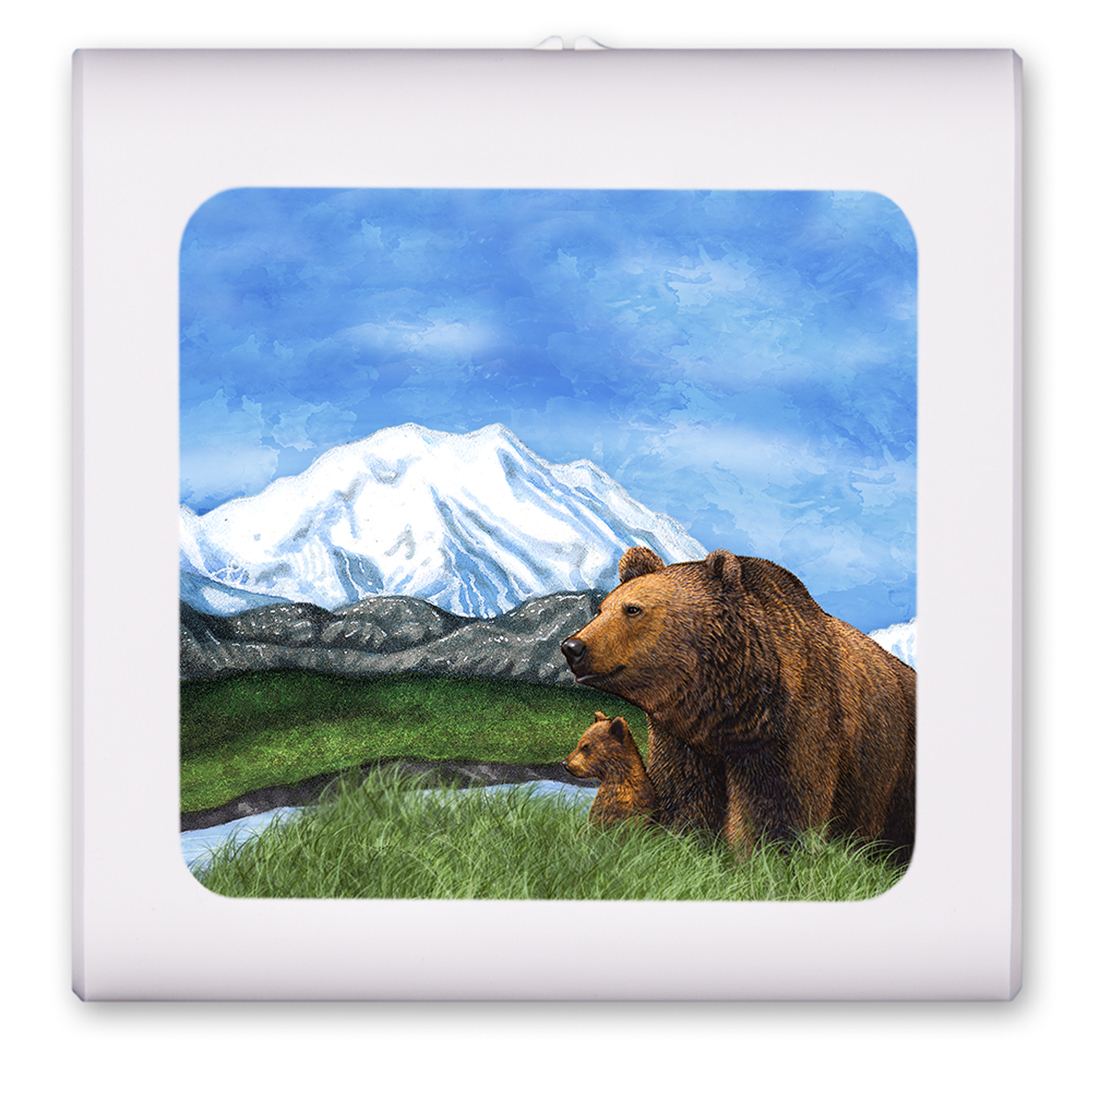 Bear and Cub - #1217